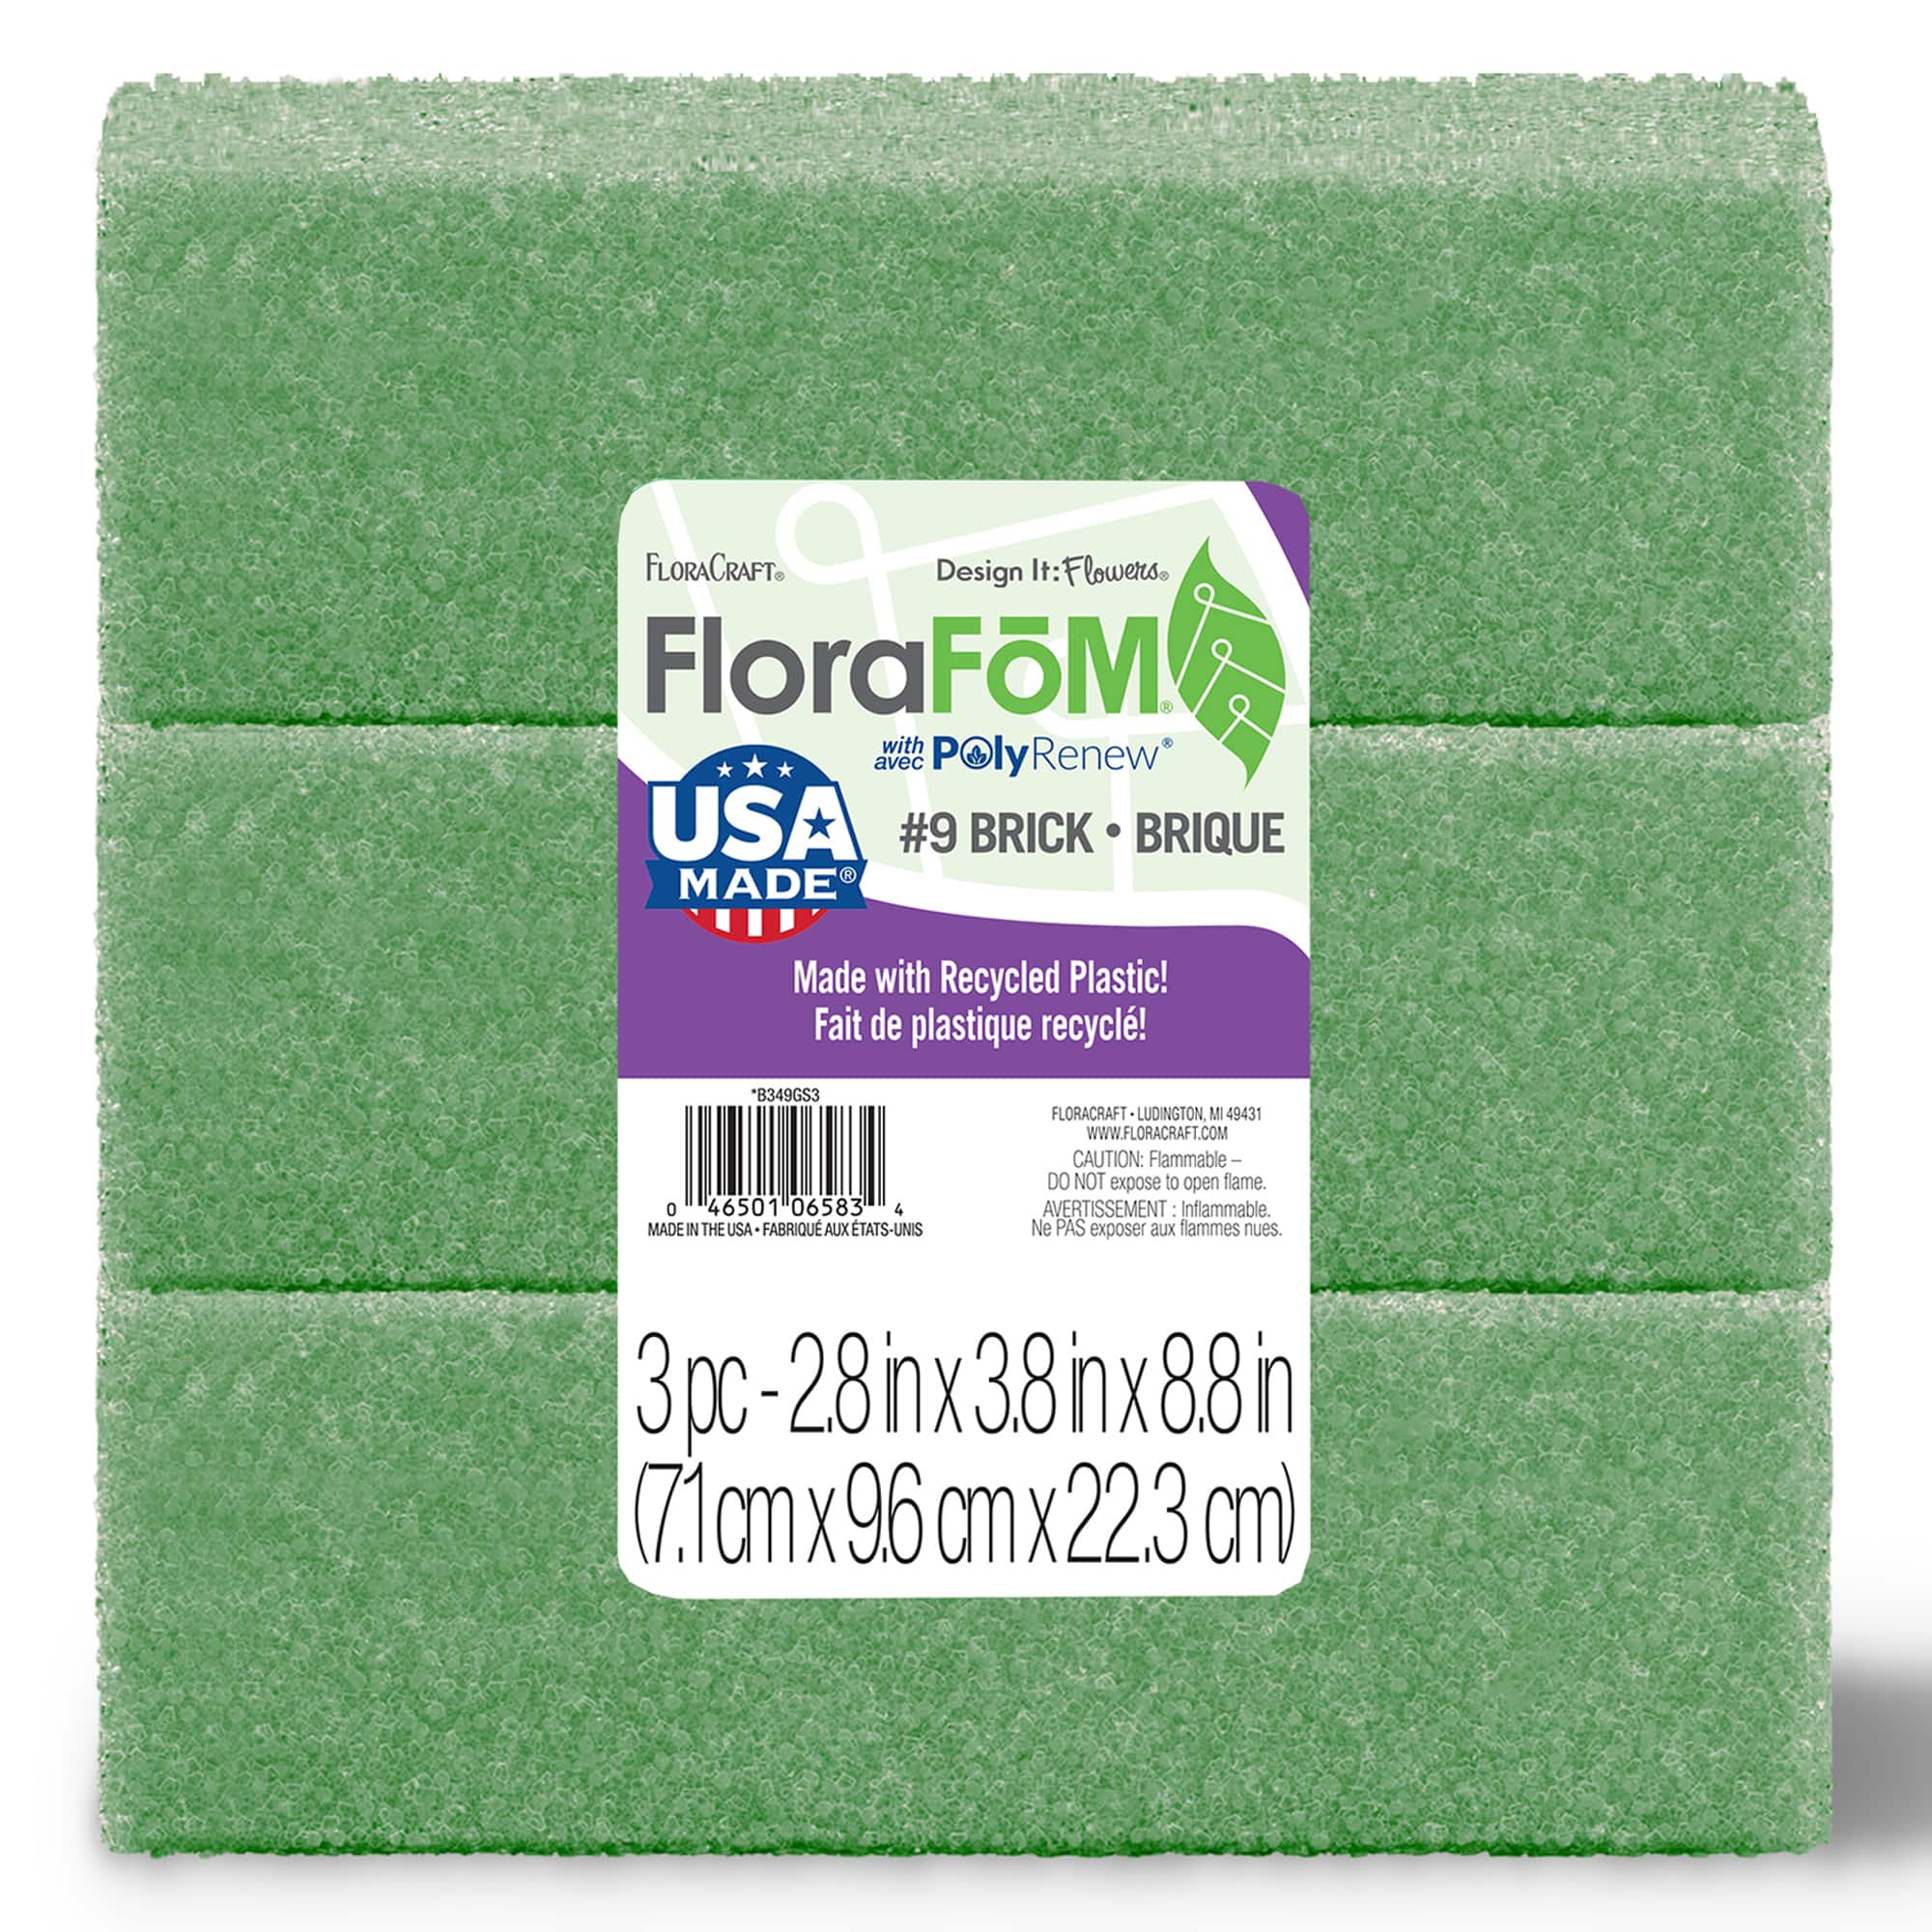 FloraCraft Floral Wet Foam 3 Piece Brick 2.8 inch x 3.8 inch x 8.8 inch  Green